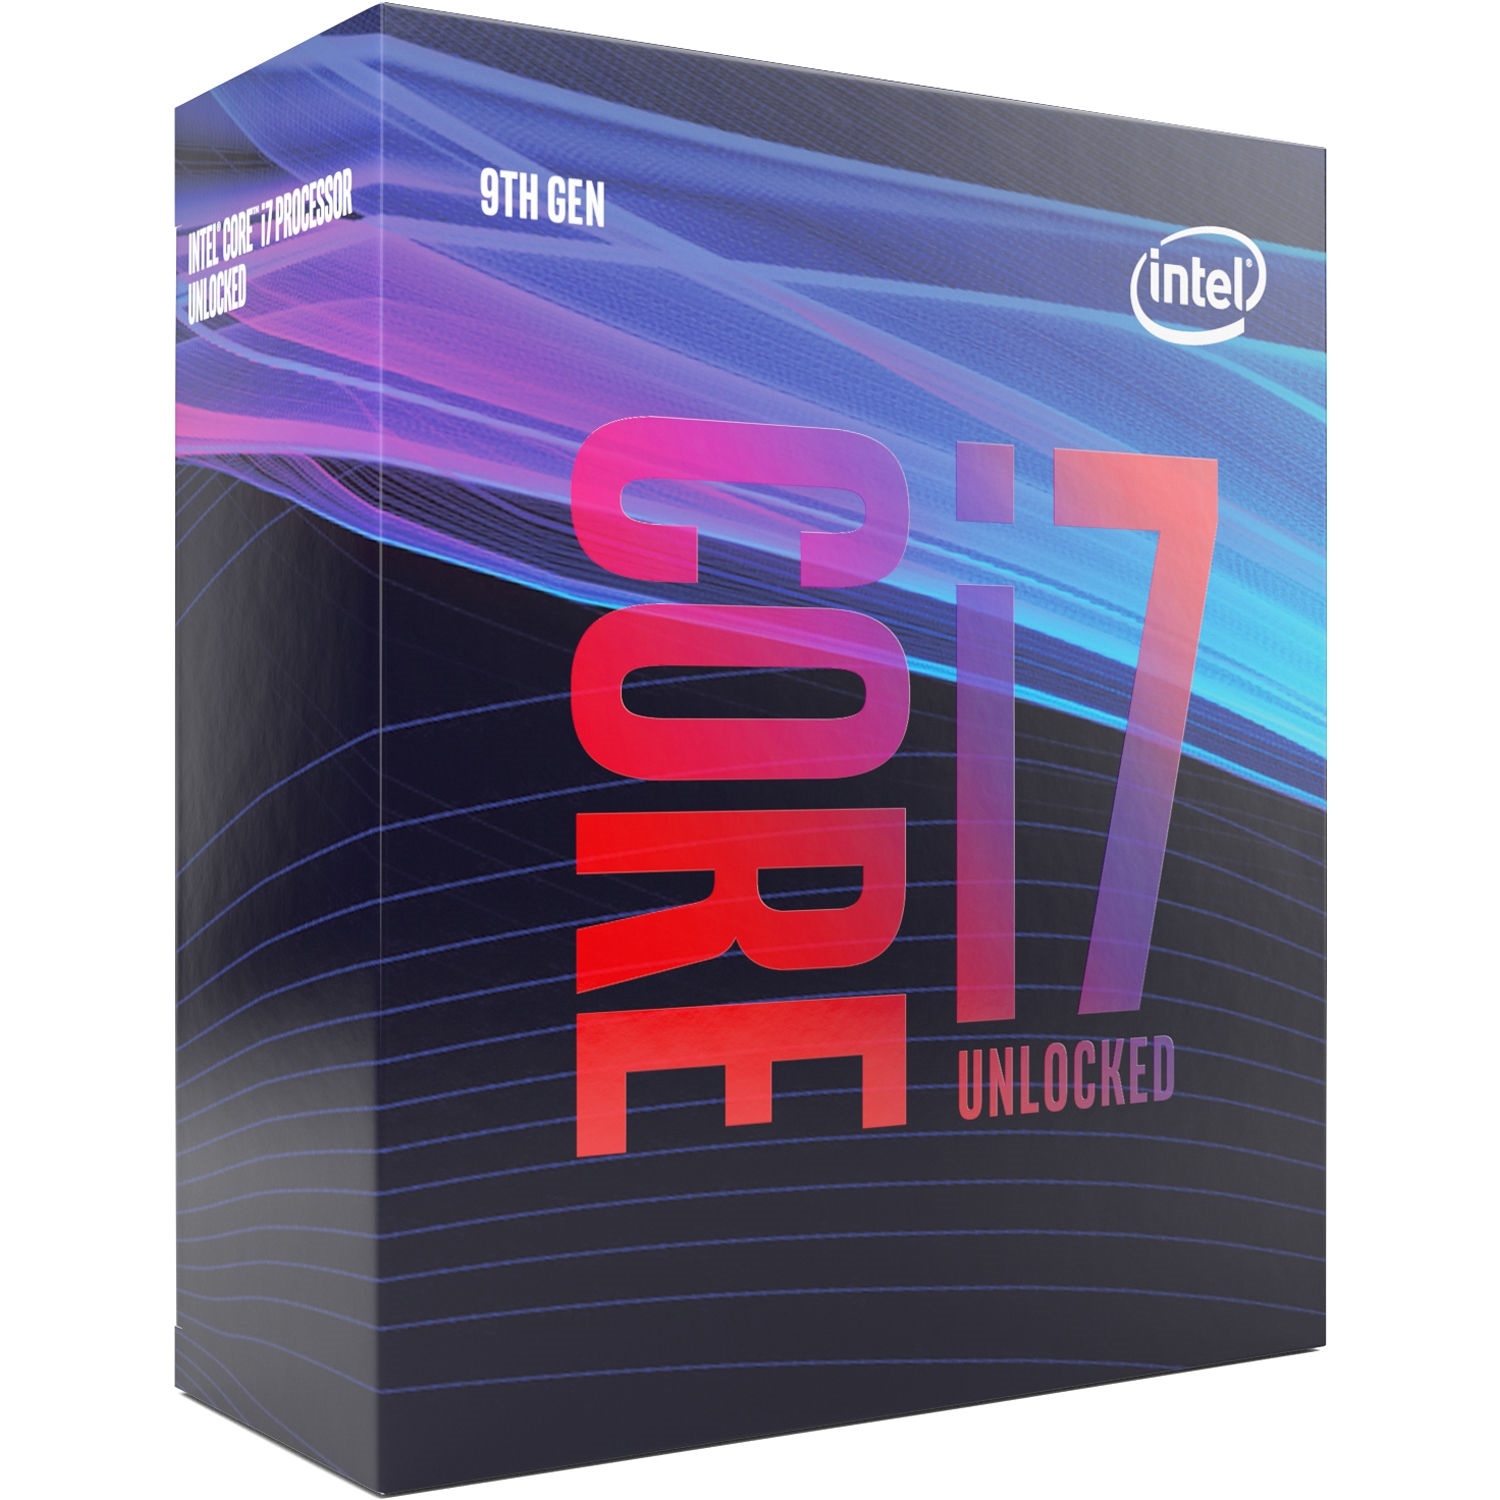 Intel Core i7-9700K 3.6 GHz Eight-Core LGA 1151 Processor